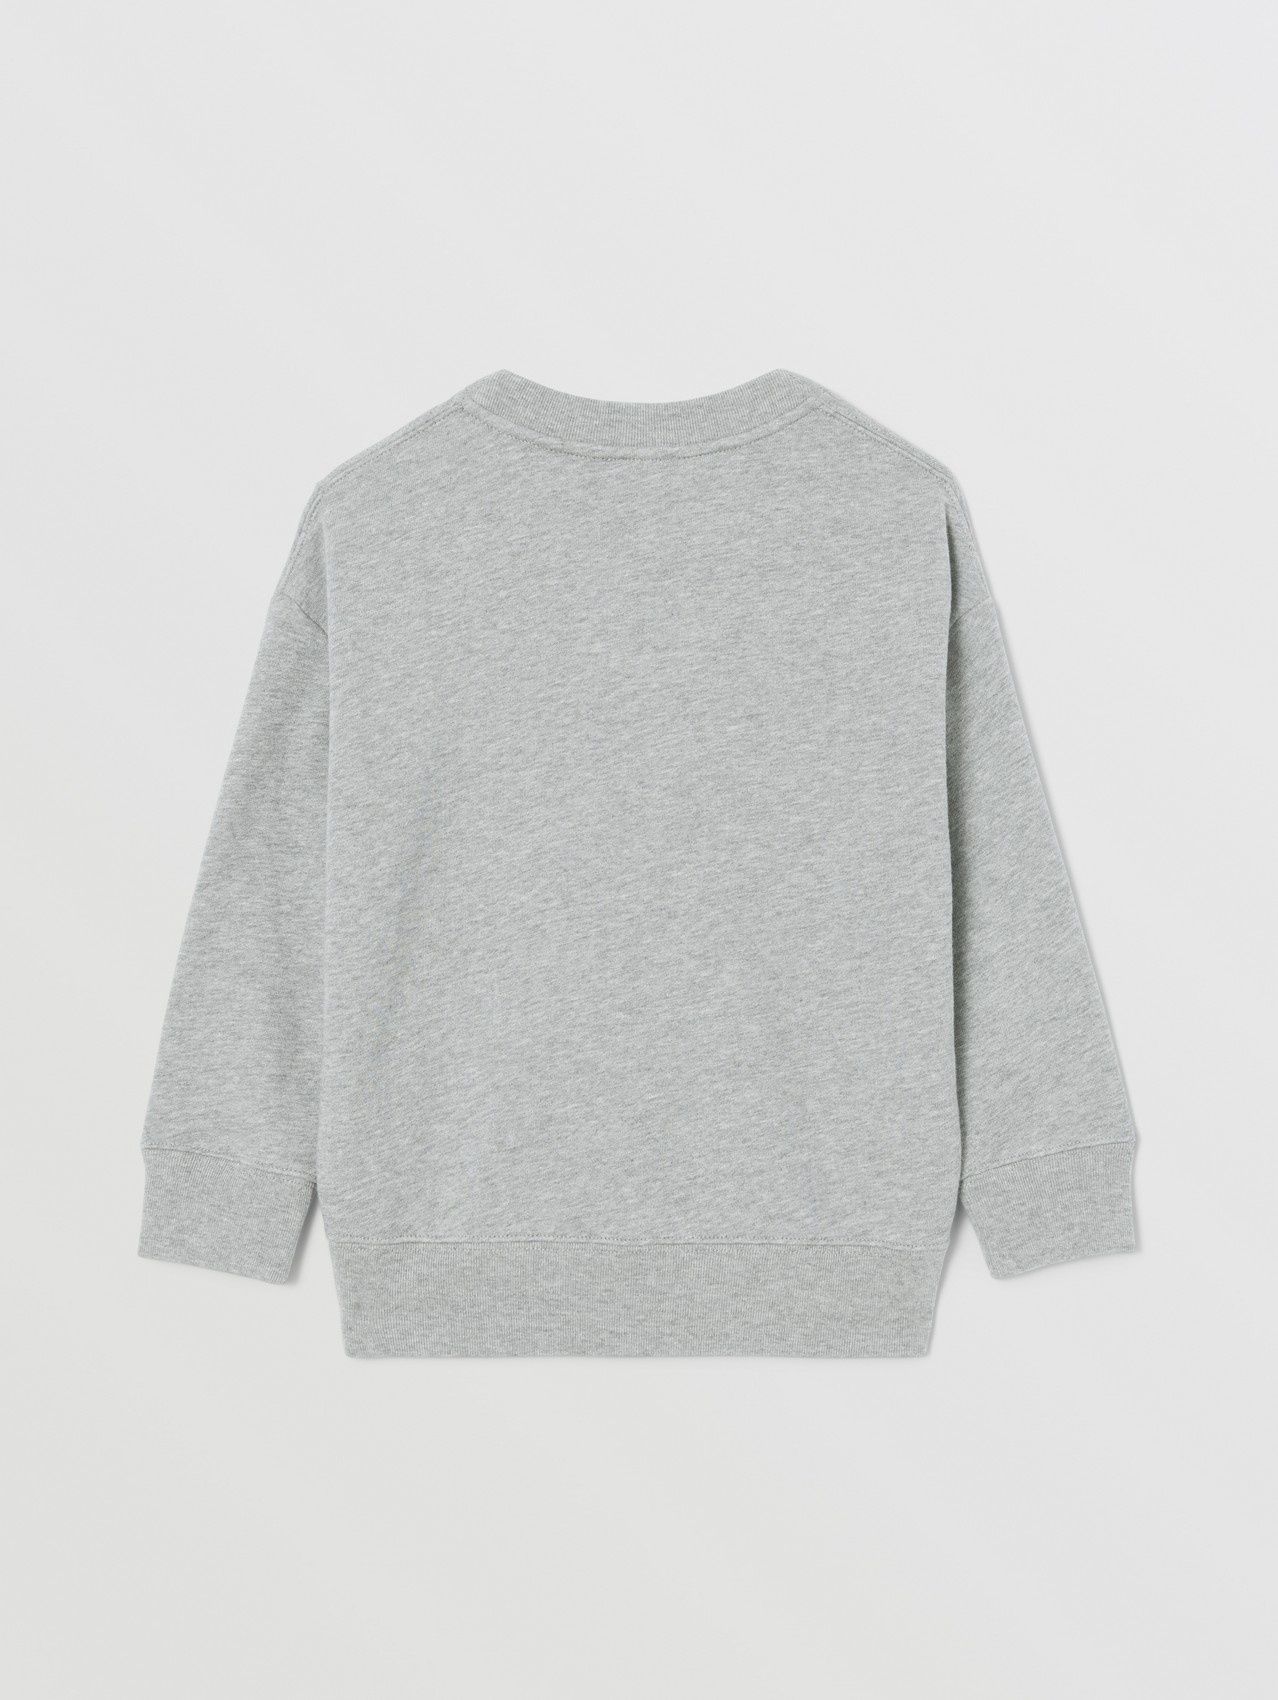 Montage Print Cotton Sweatshirt in Grey Melange